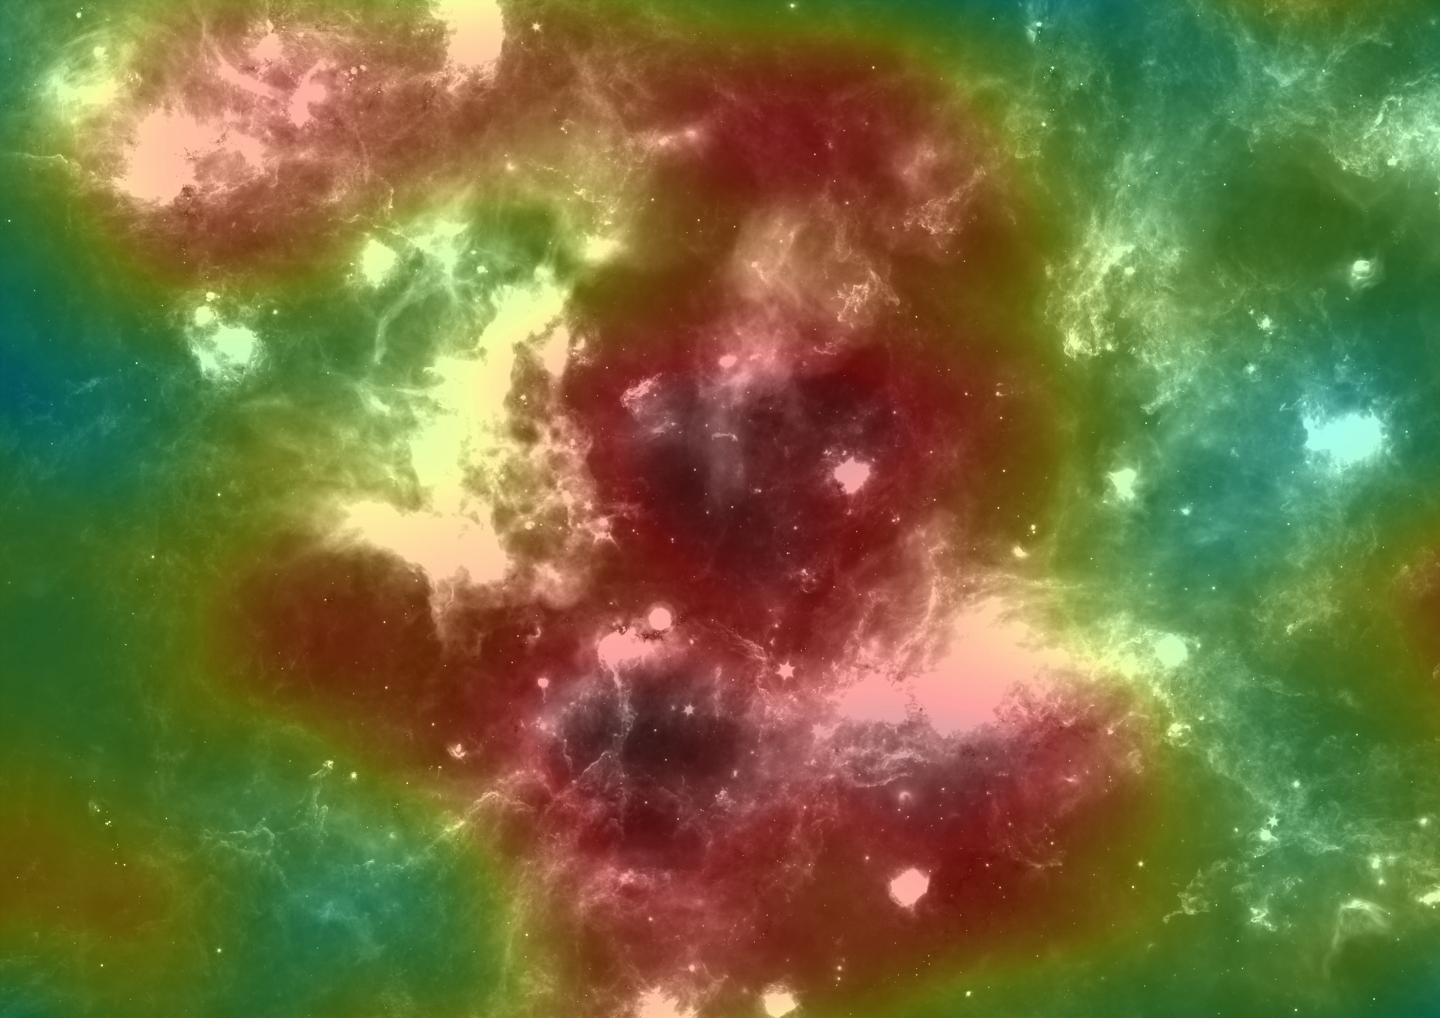 Photon origins tracked to Cygnus OB2 star-forming region